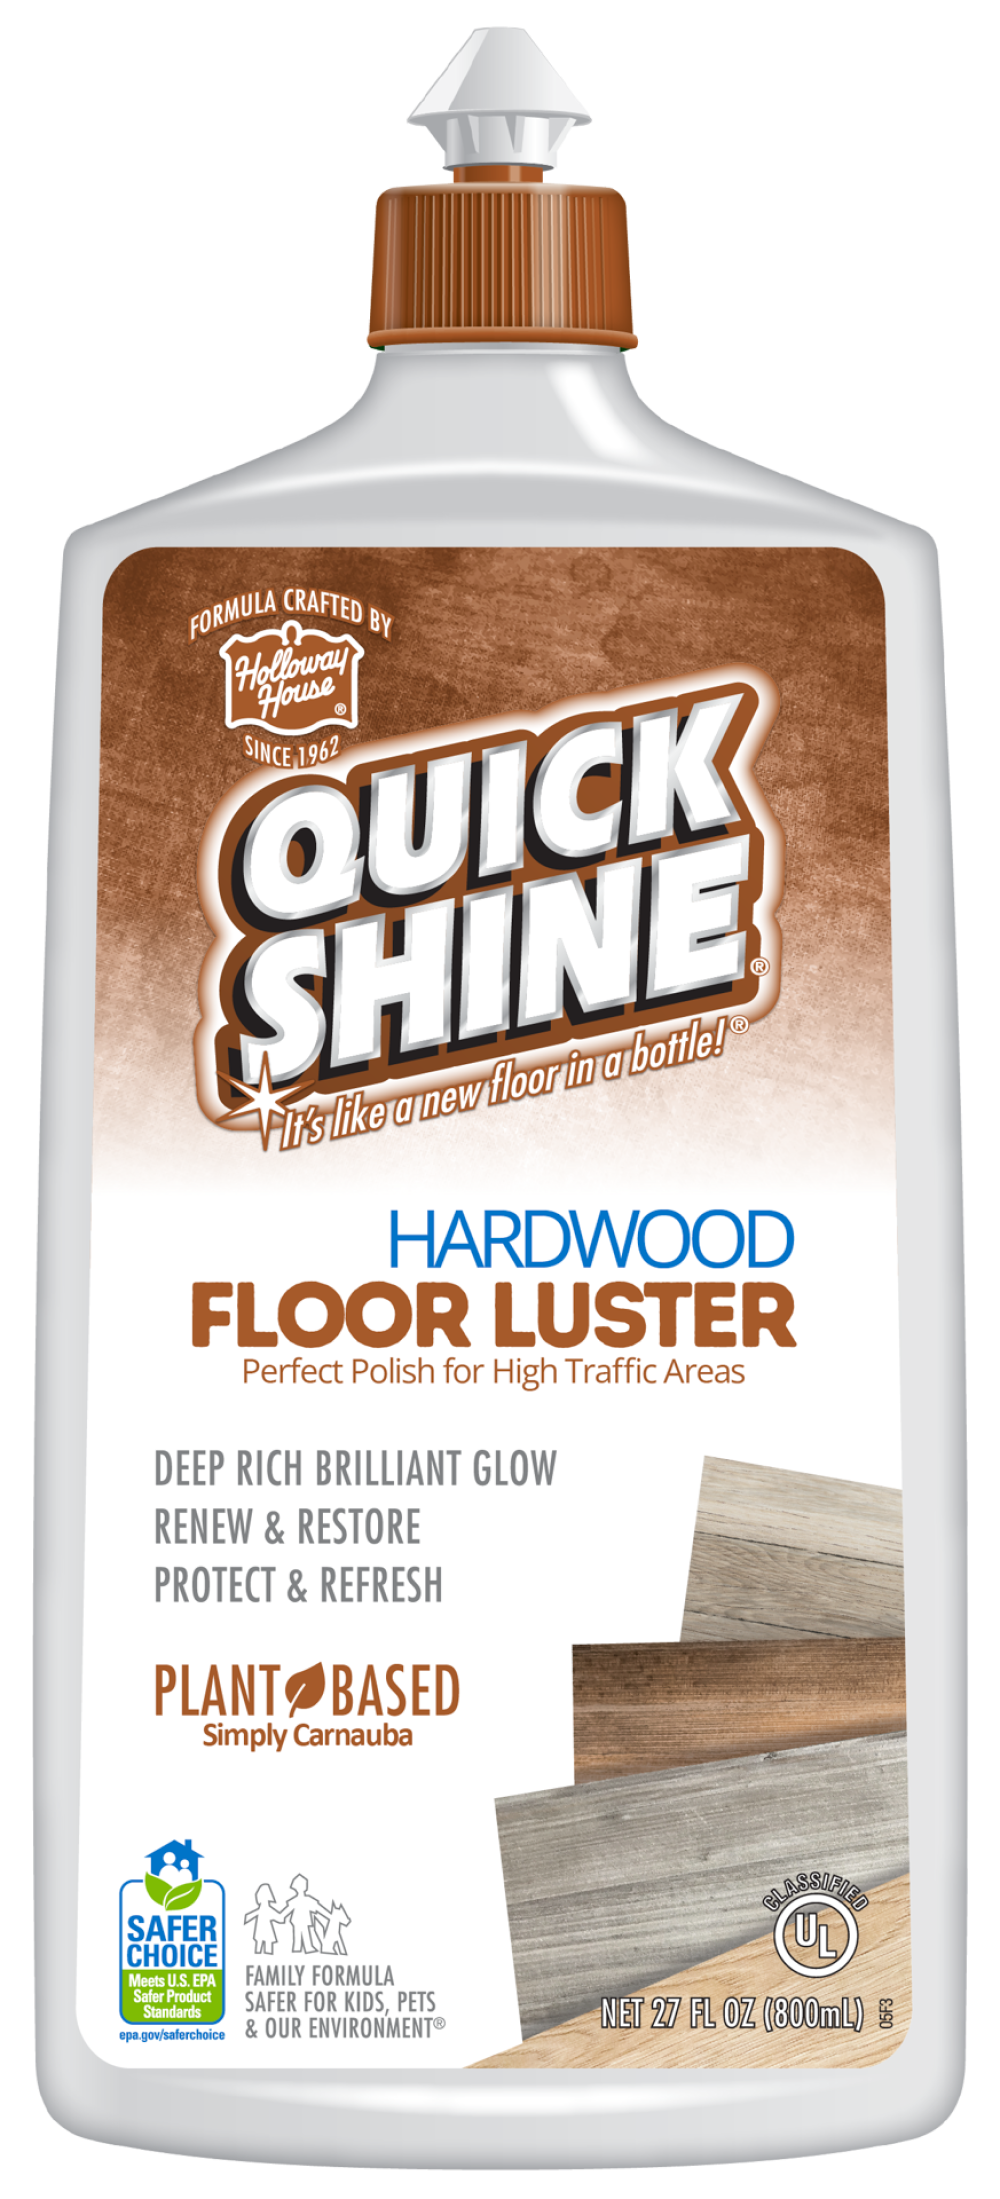 Quick Shine Hardwood Floor Kit with Microfiber Mop Pad